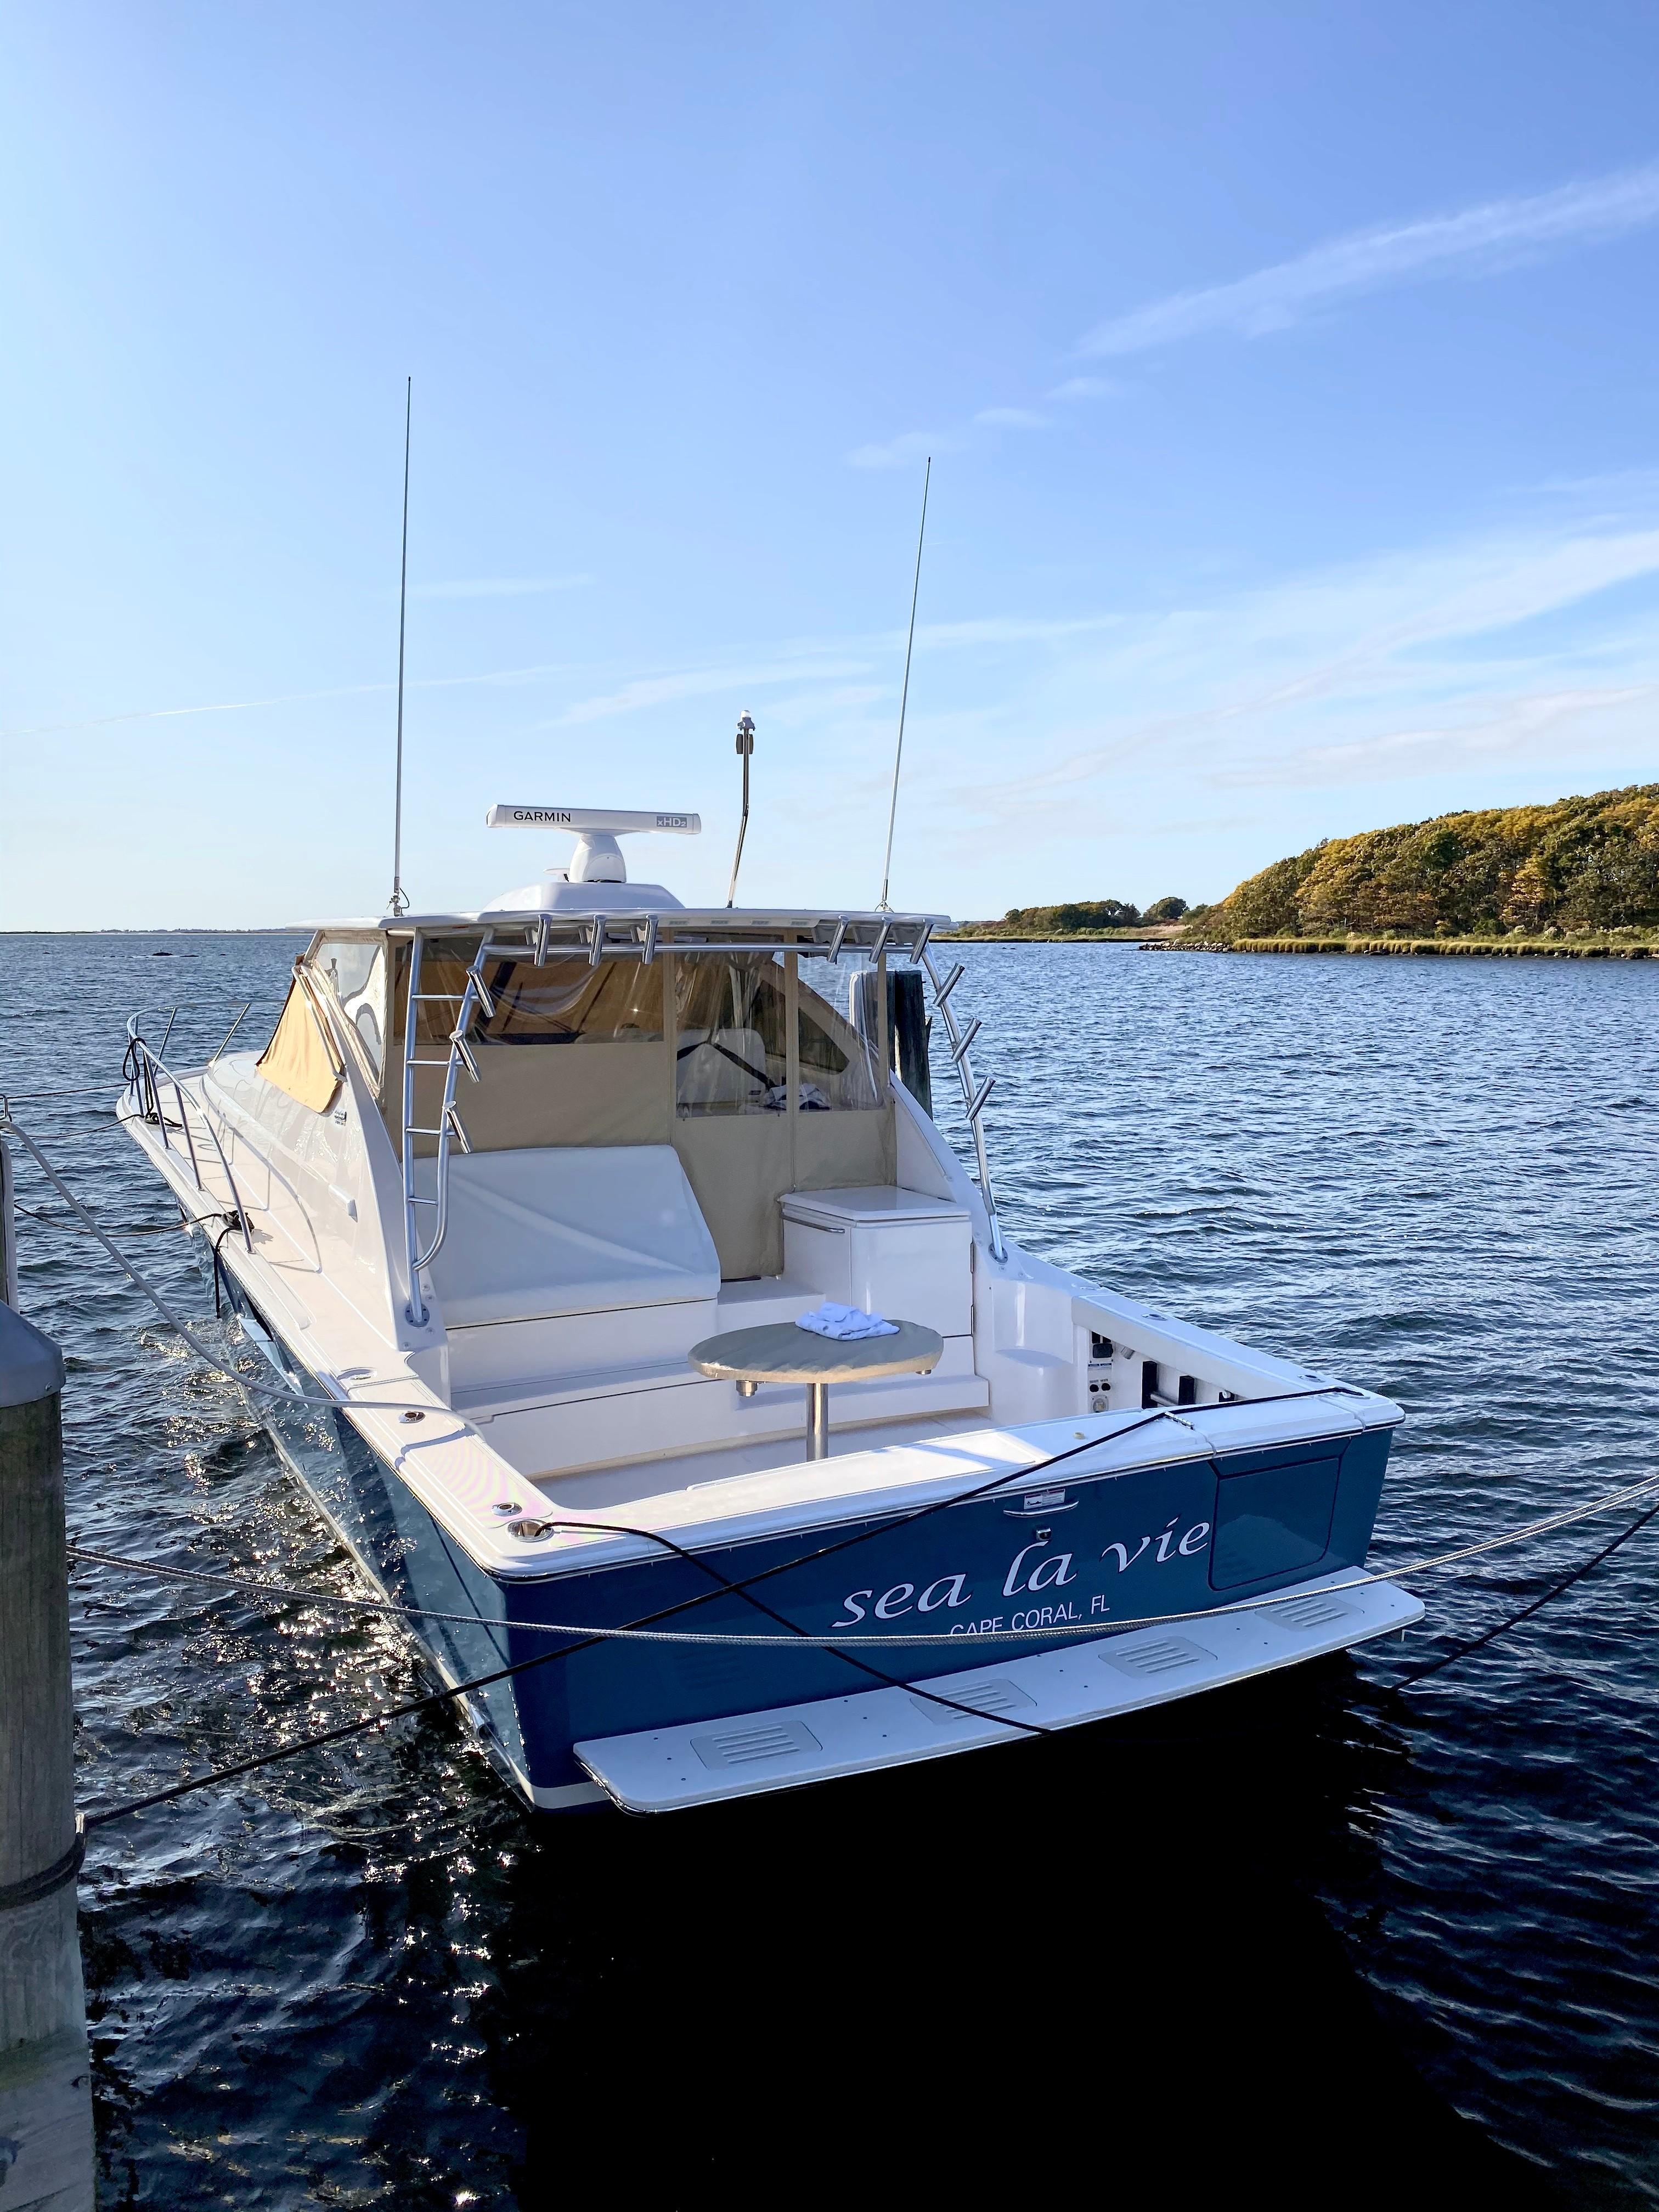 43 Tiara Yachts 2016 SEA LA VIE Mystic, Connecticut Sold on 2020-09-28 by  Denison Yacht Sales